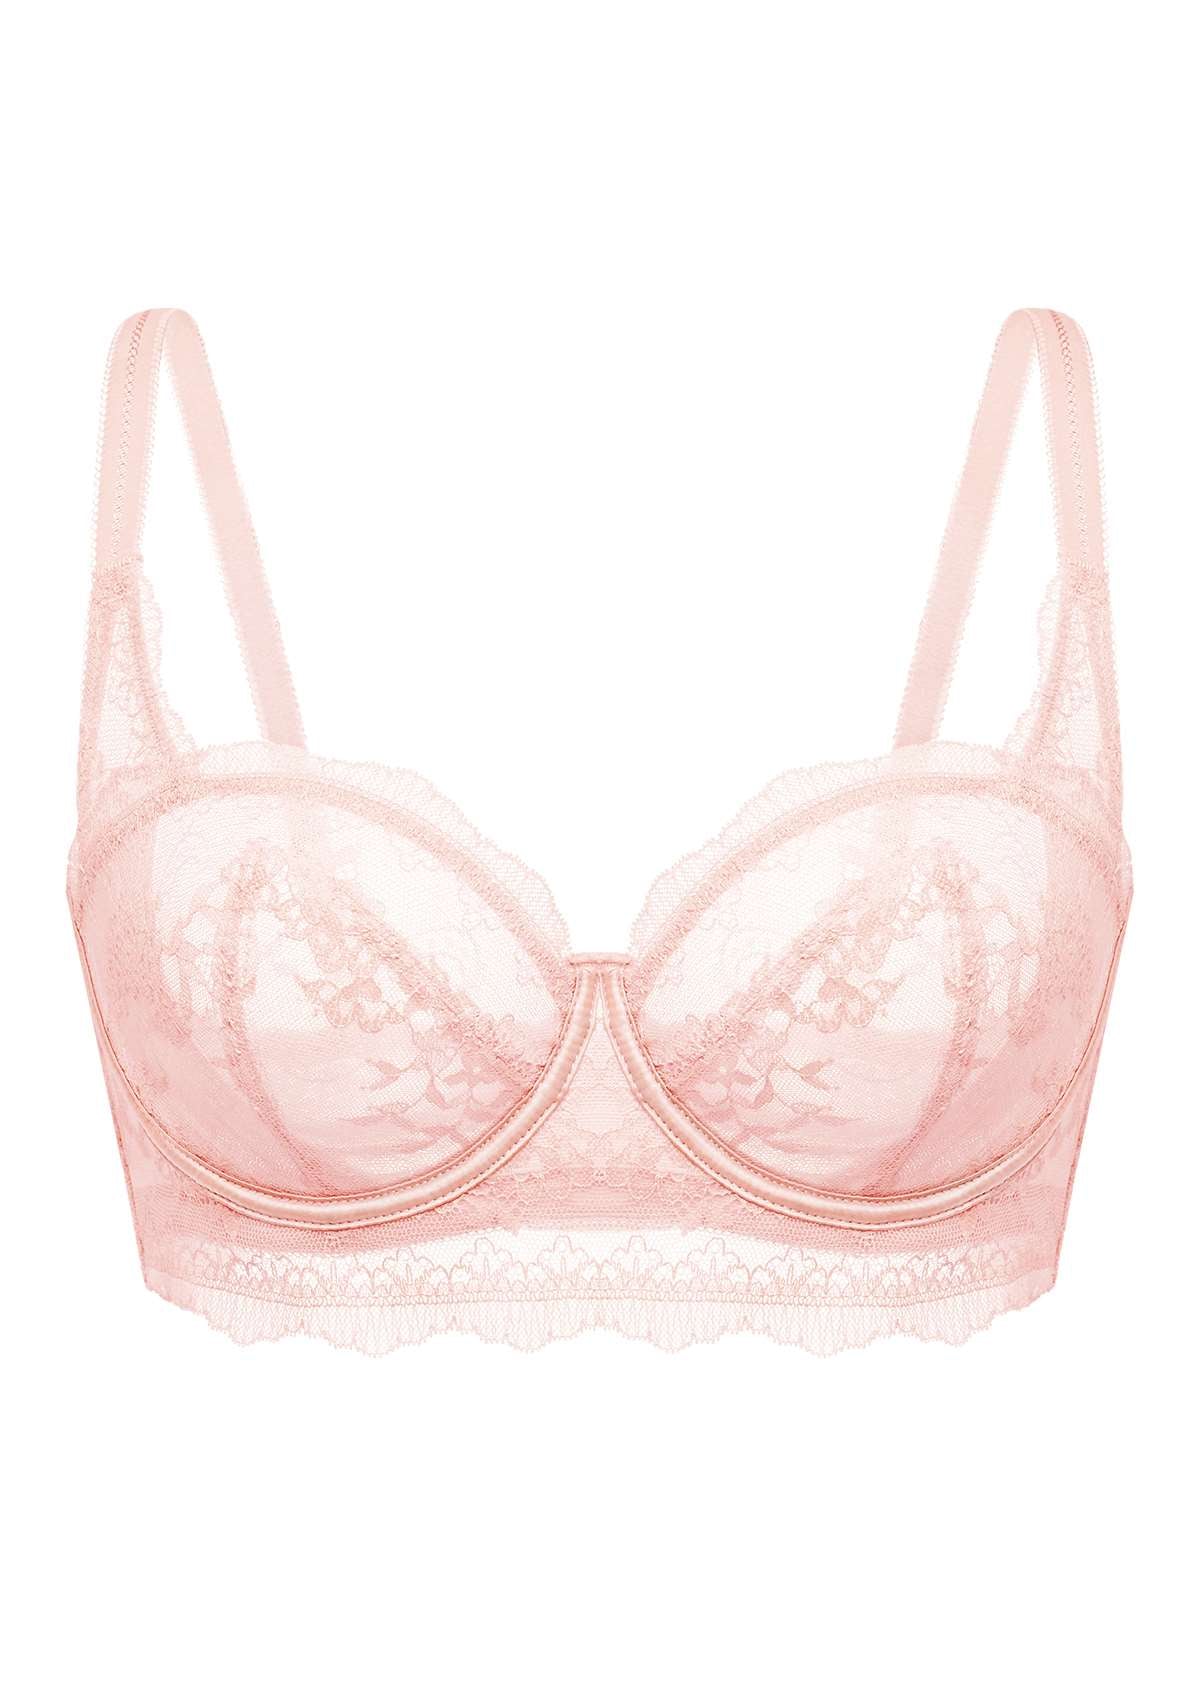 HSIA Floral Lace Unlined Bridal Balconette Delicate Bra Panty Set - Pink / 34 / C